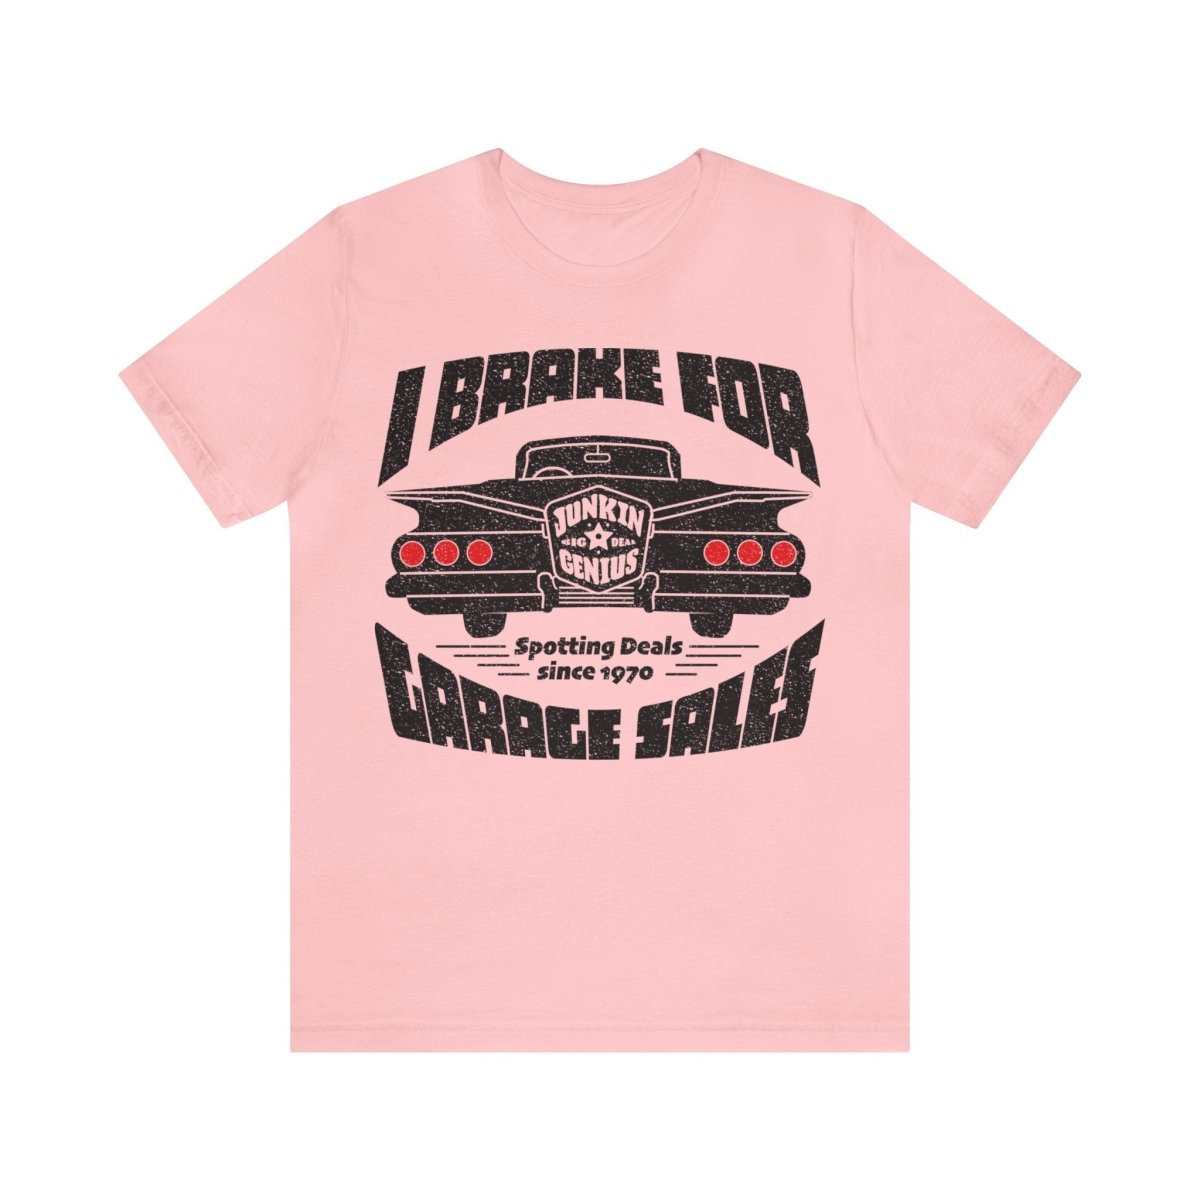 Garage Sale Brakes Premium T-Shirt, Flea Markets, Thrift Stores, Antiques, Used Goods, Junkin' Genius